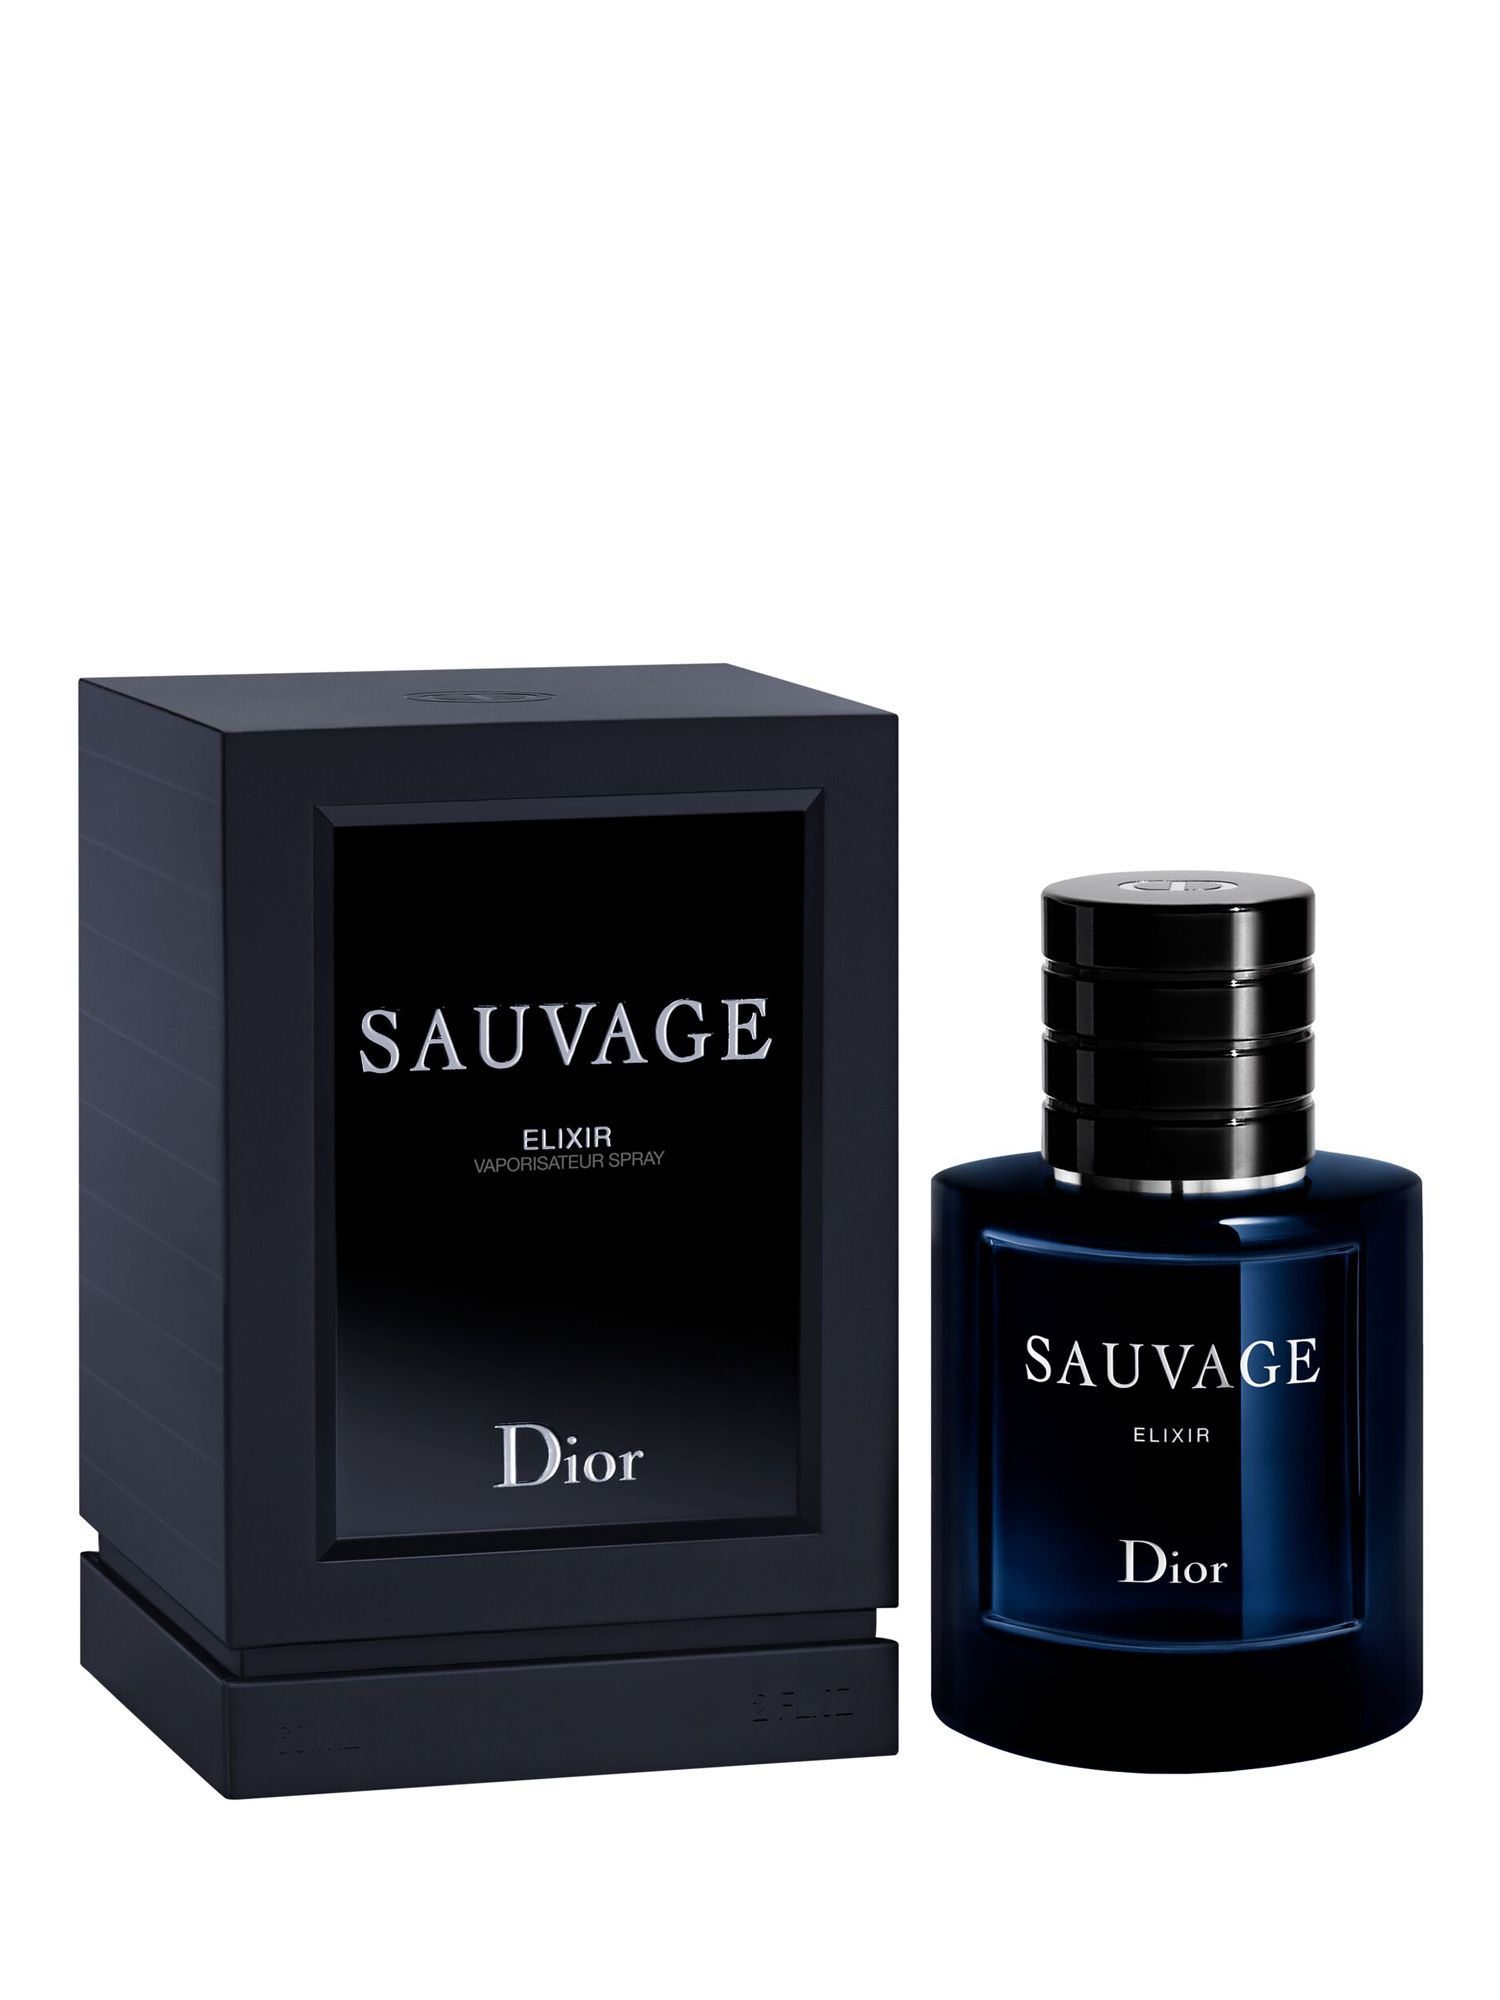 DIOR Sauvage Elixir, 60ml 3